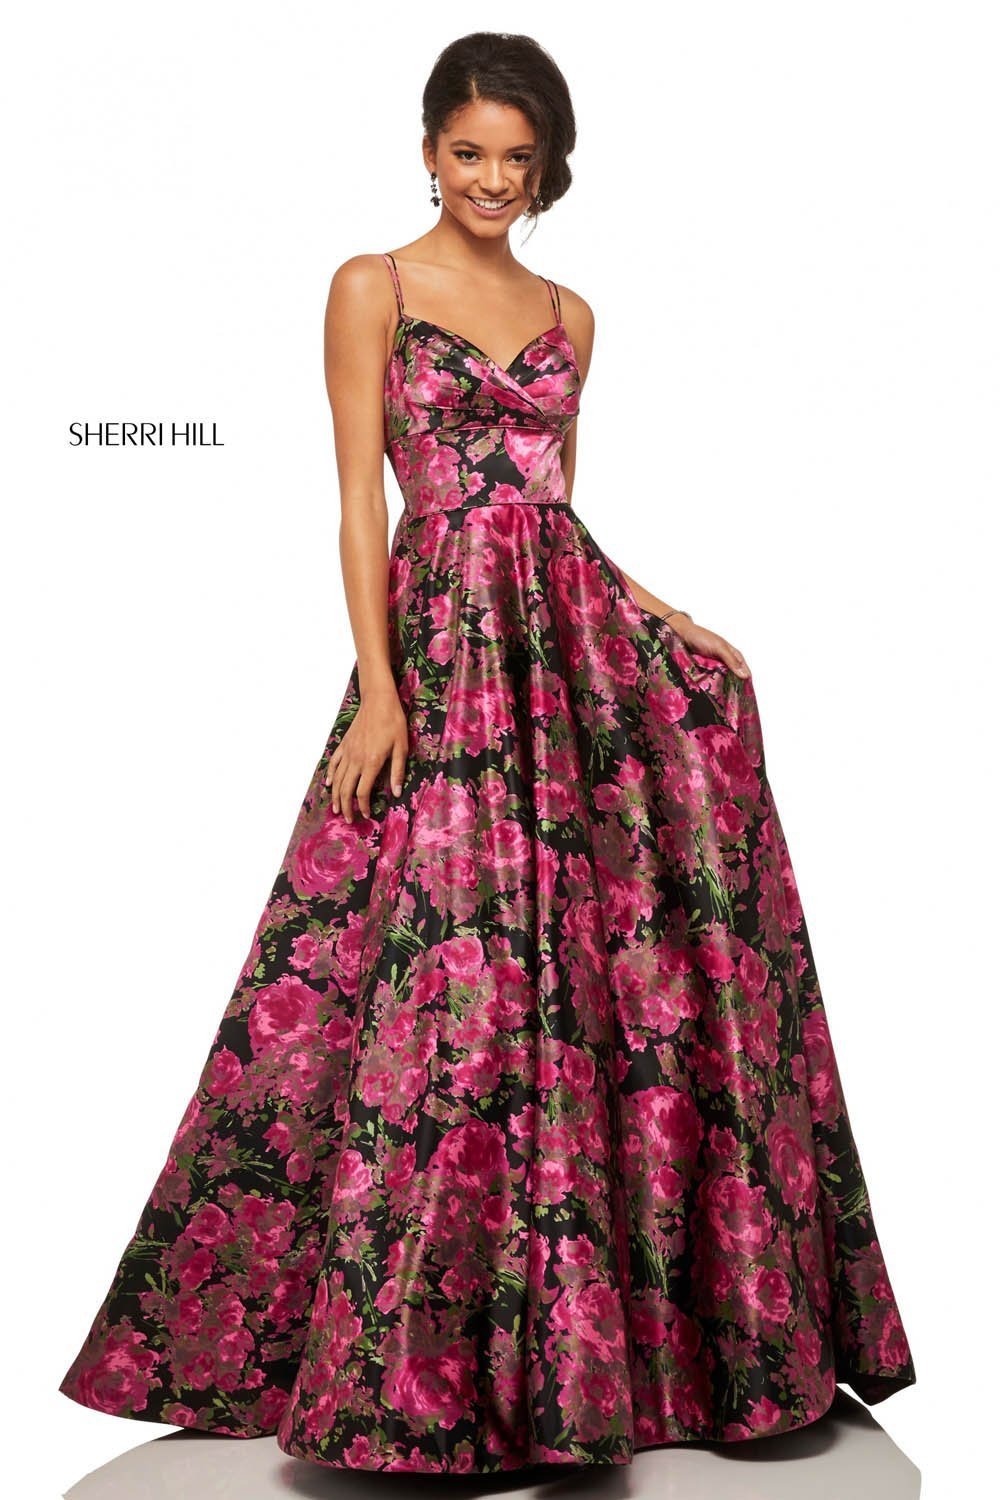 Sherri Hill 52932 dress images in these colors: Black Fuchsia Print.